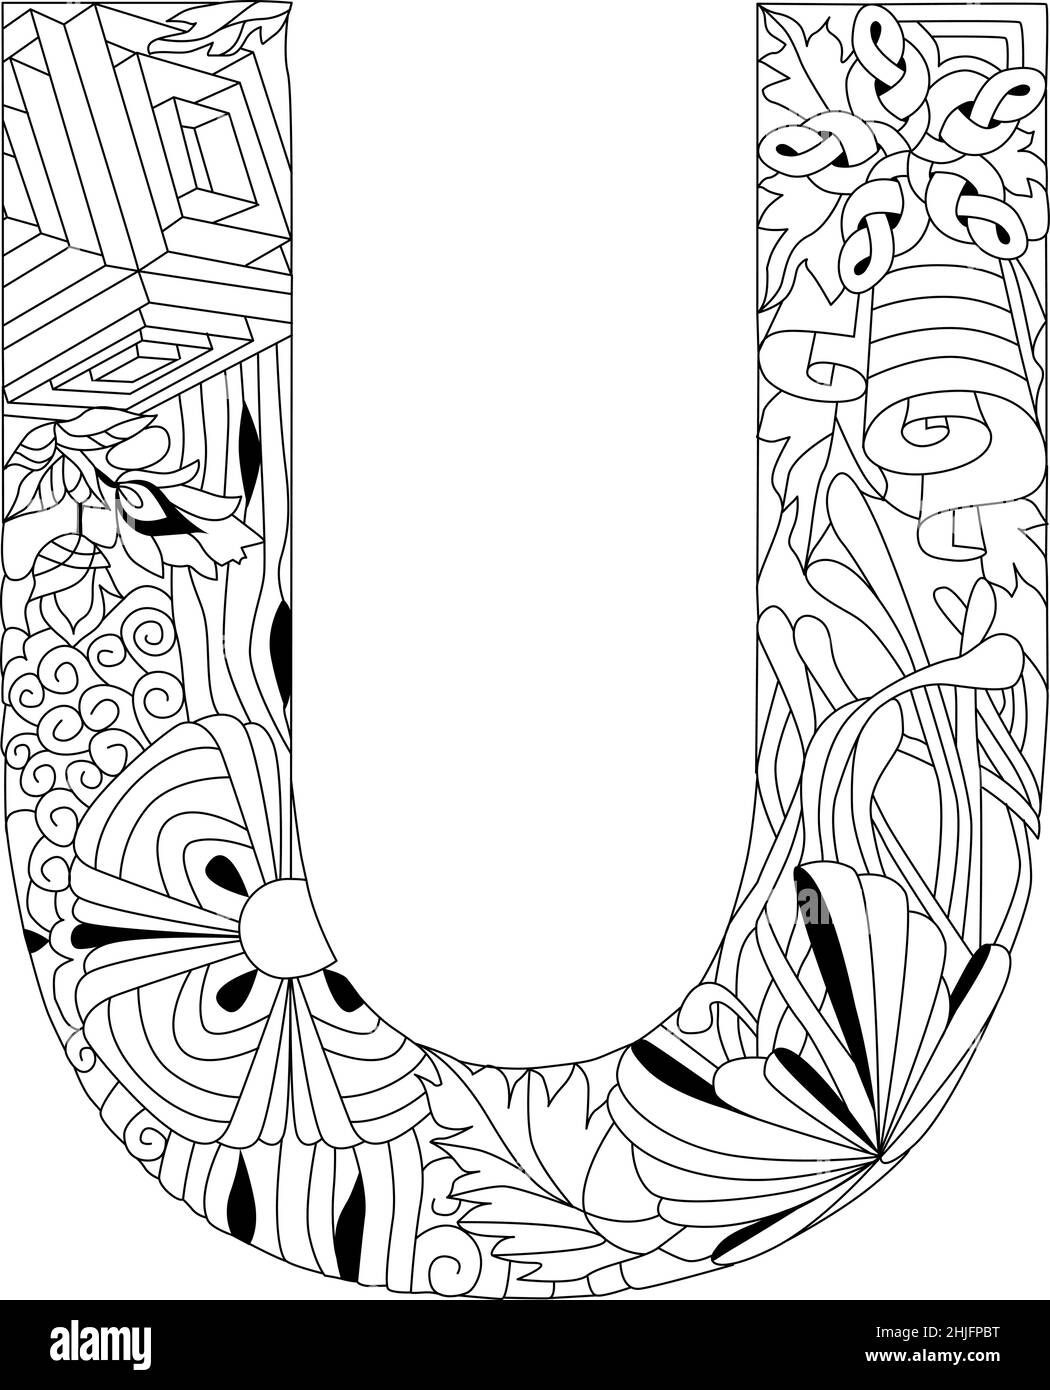 Zentangle stylized alphabet - letter U for coloring. Vector illustration. Ethnic pattern Stock Vector